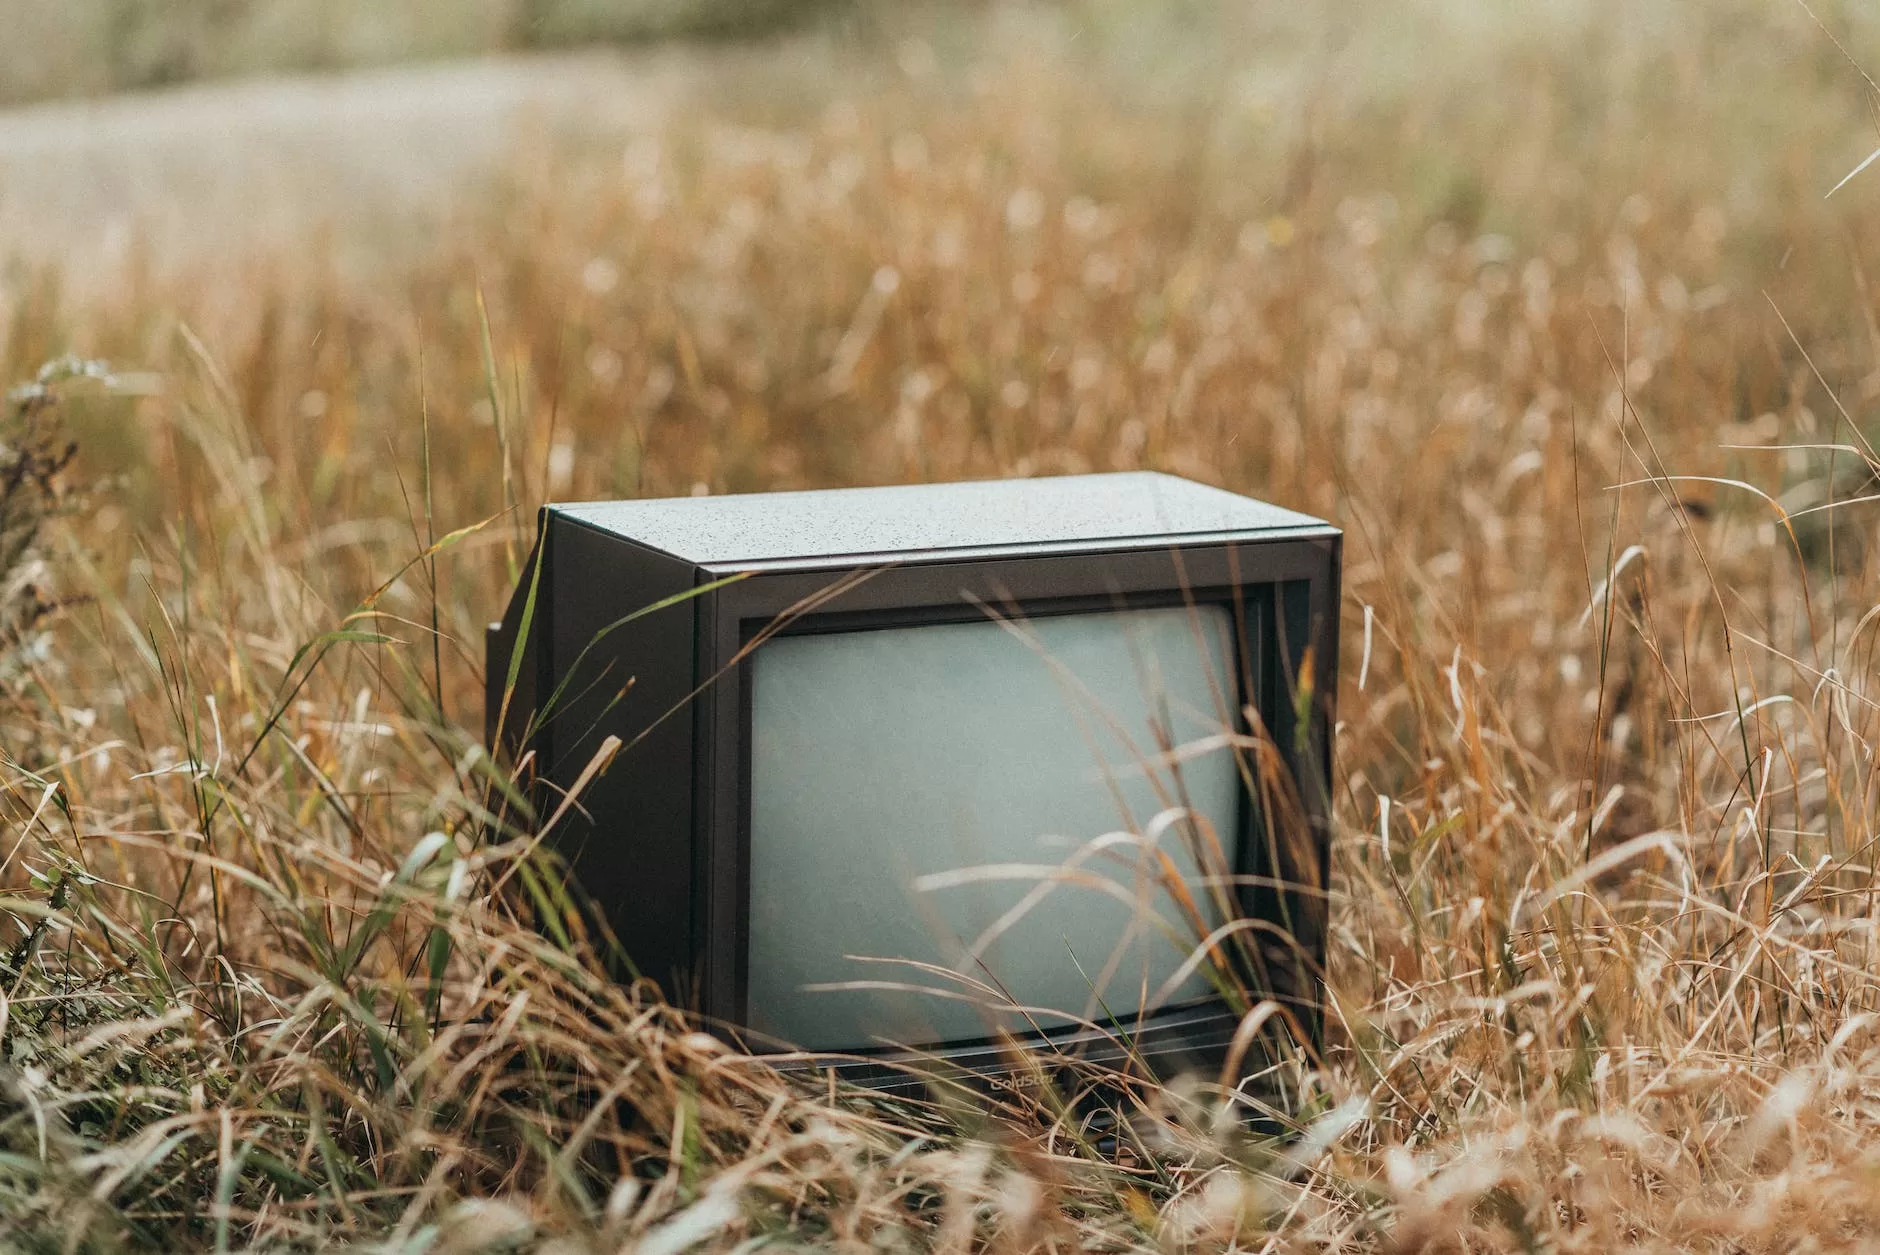 retro tv set in dried grass